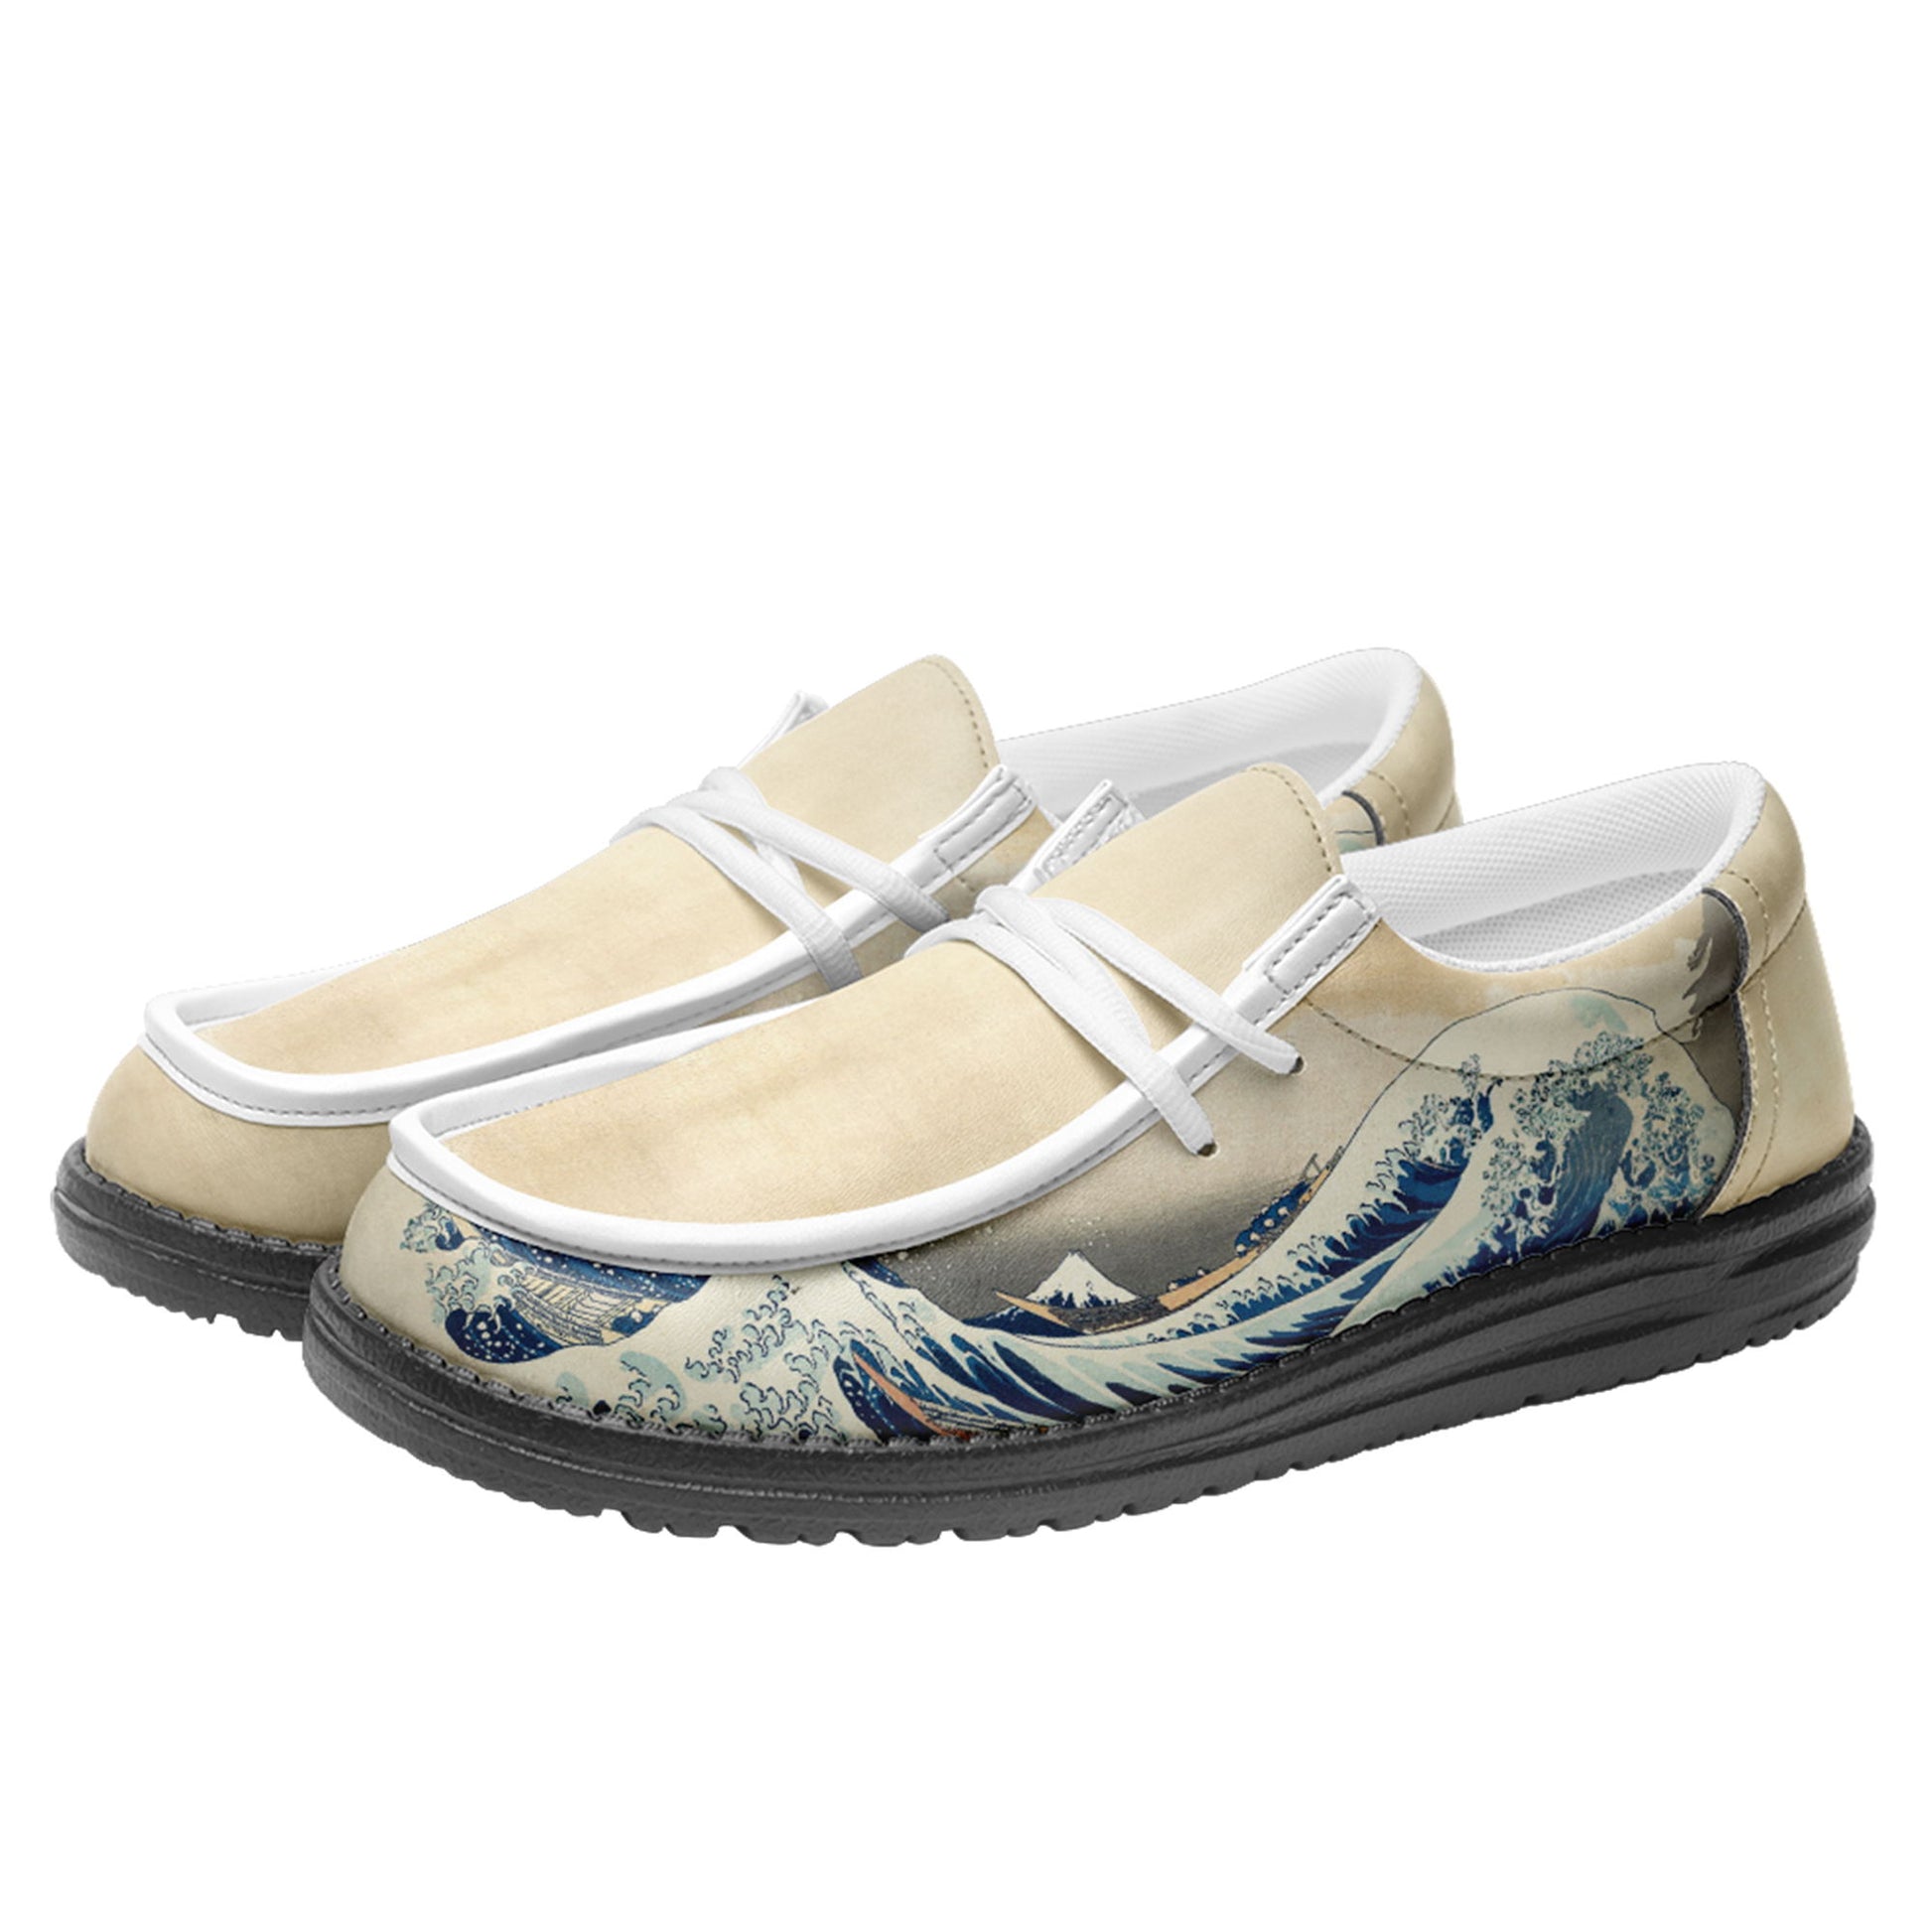 customize printed yo bro shoes ukiyo-e katsushika hokusai's the great wave off kanagawa casual shoes white shoelace 4